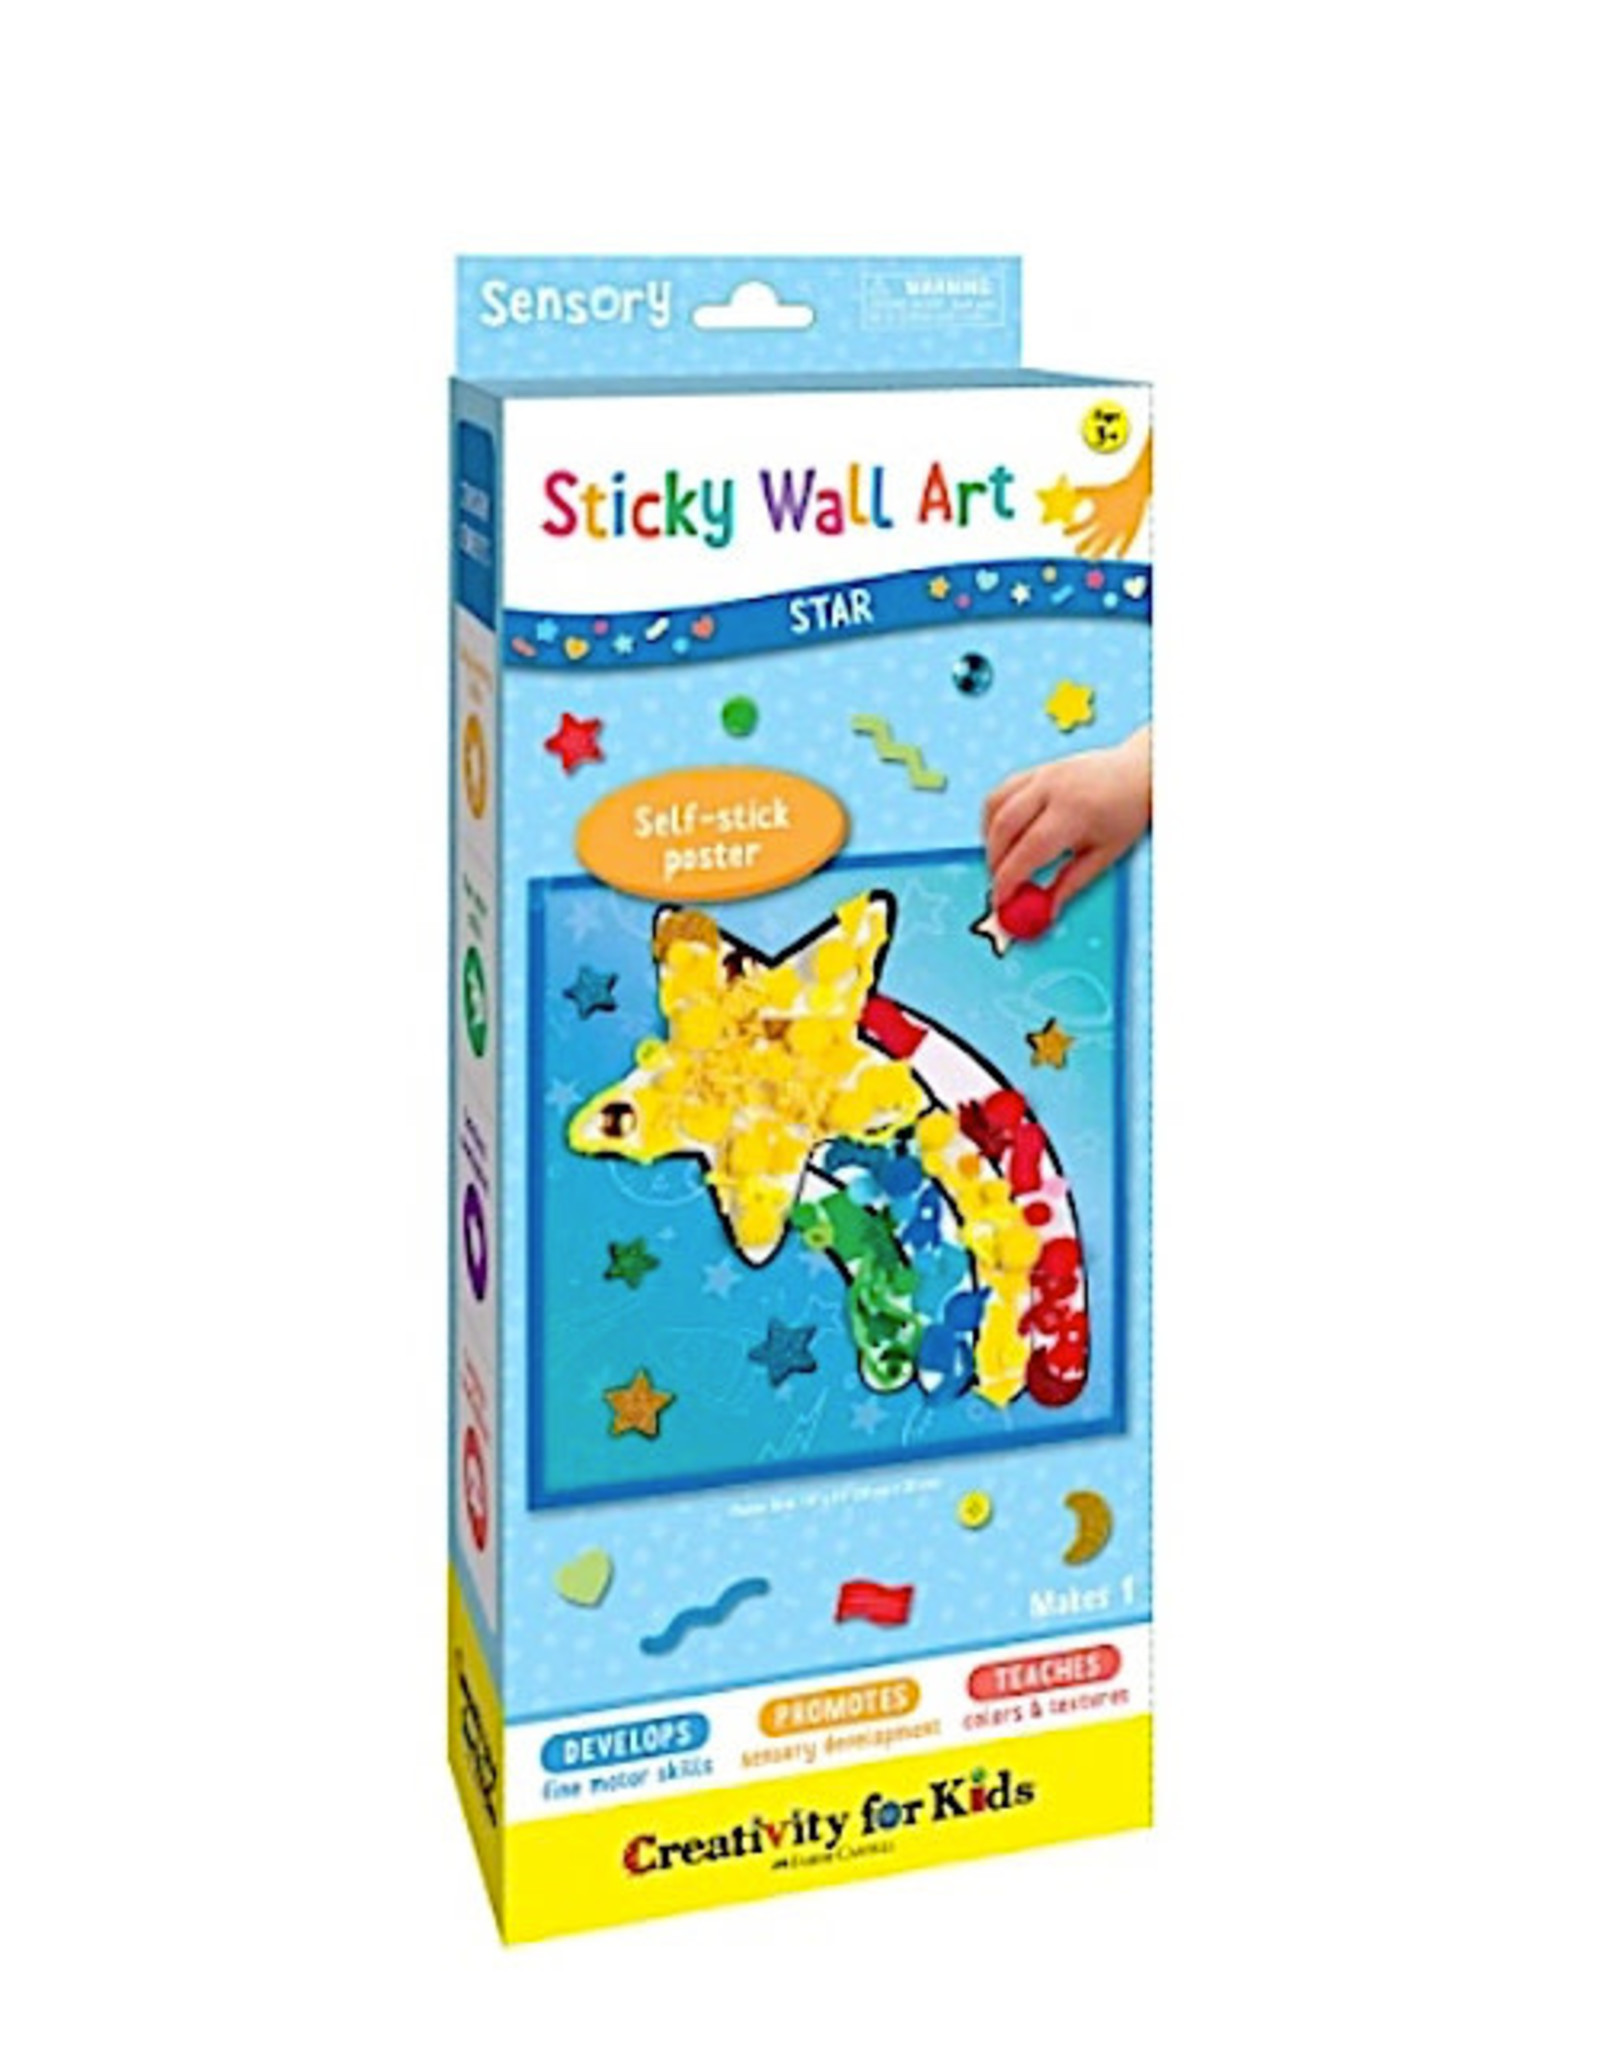 Sensory Sticky Wall Art